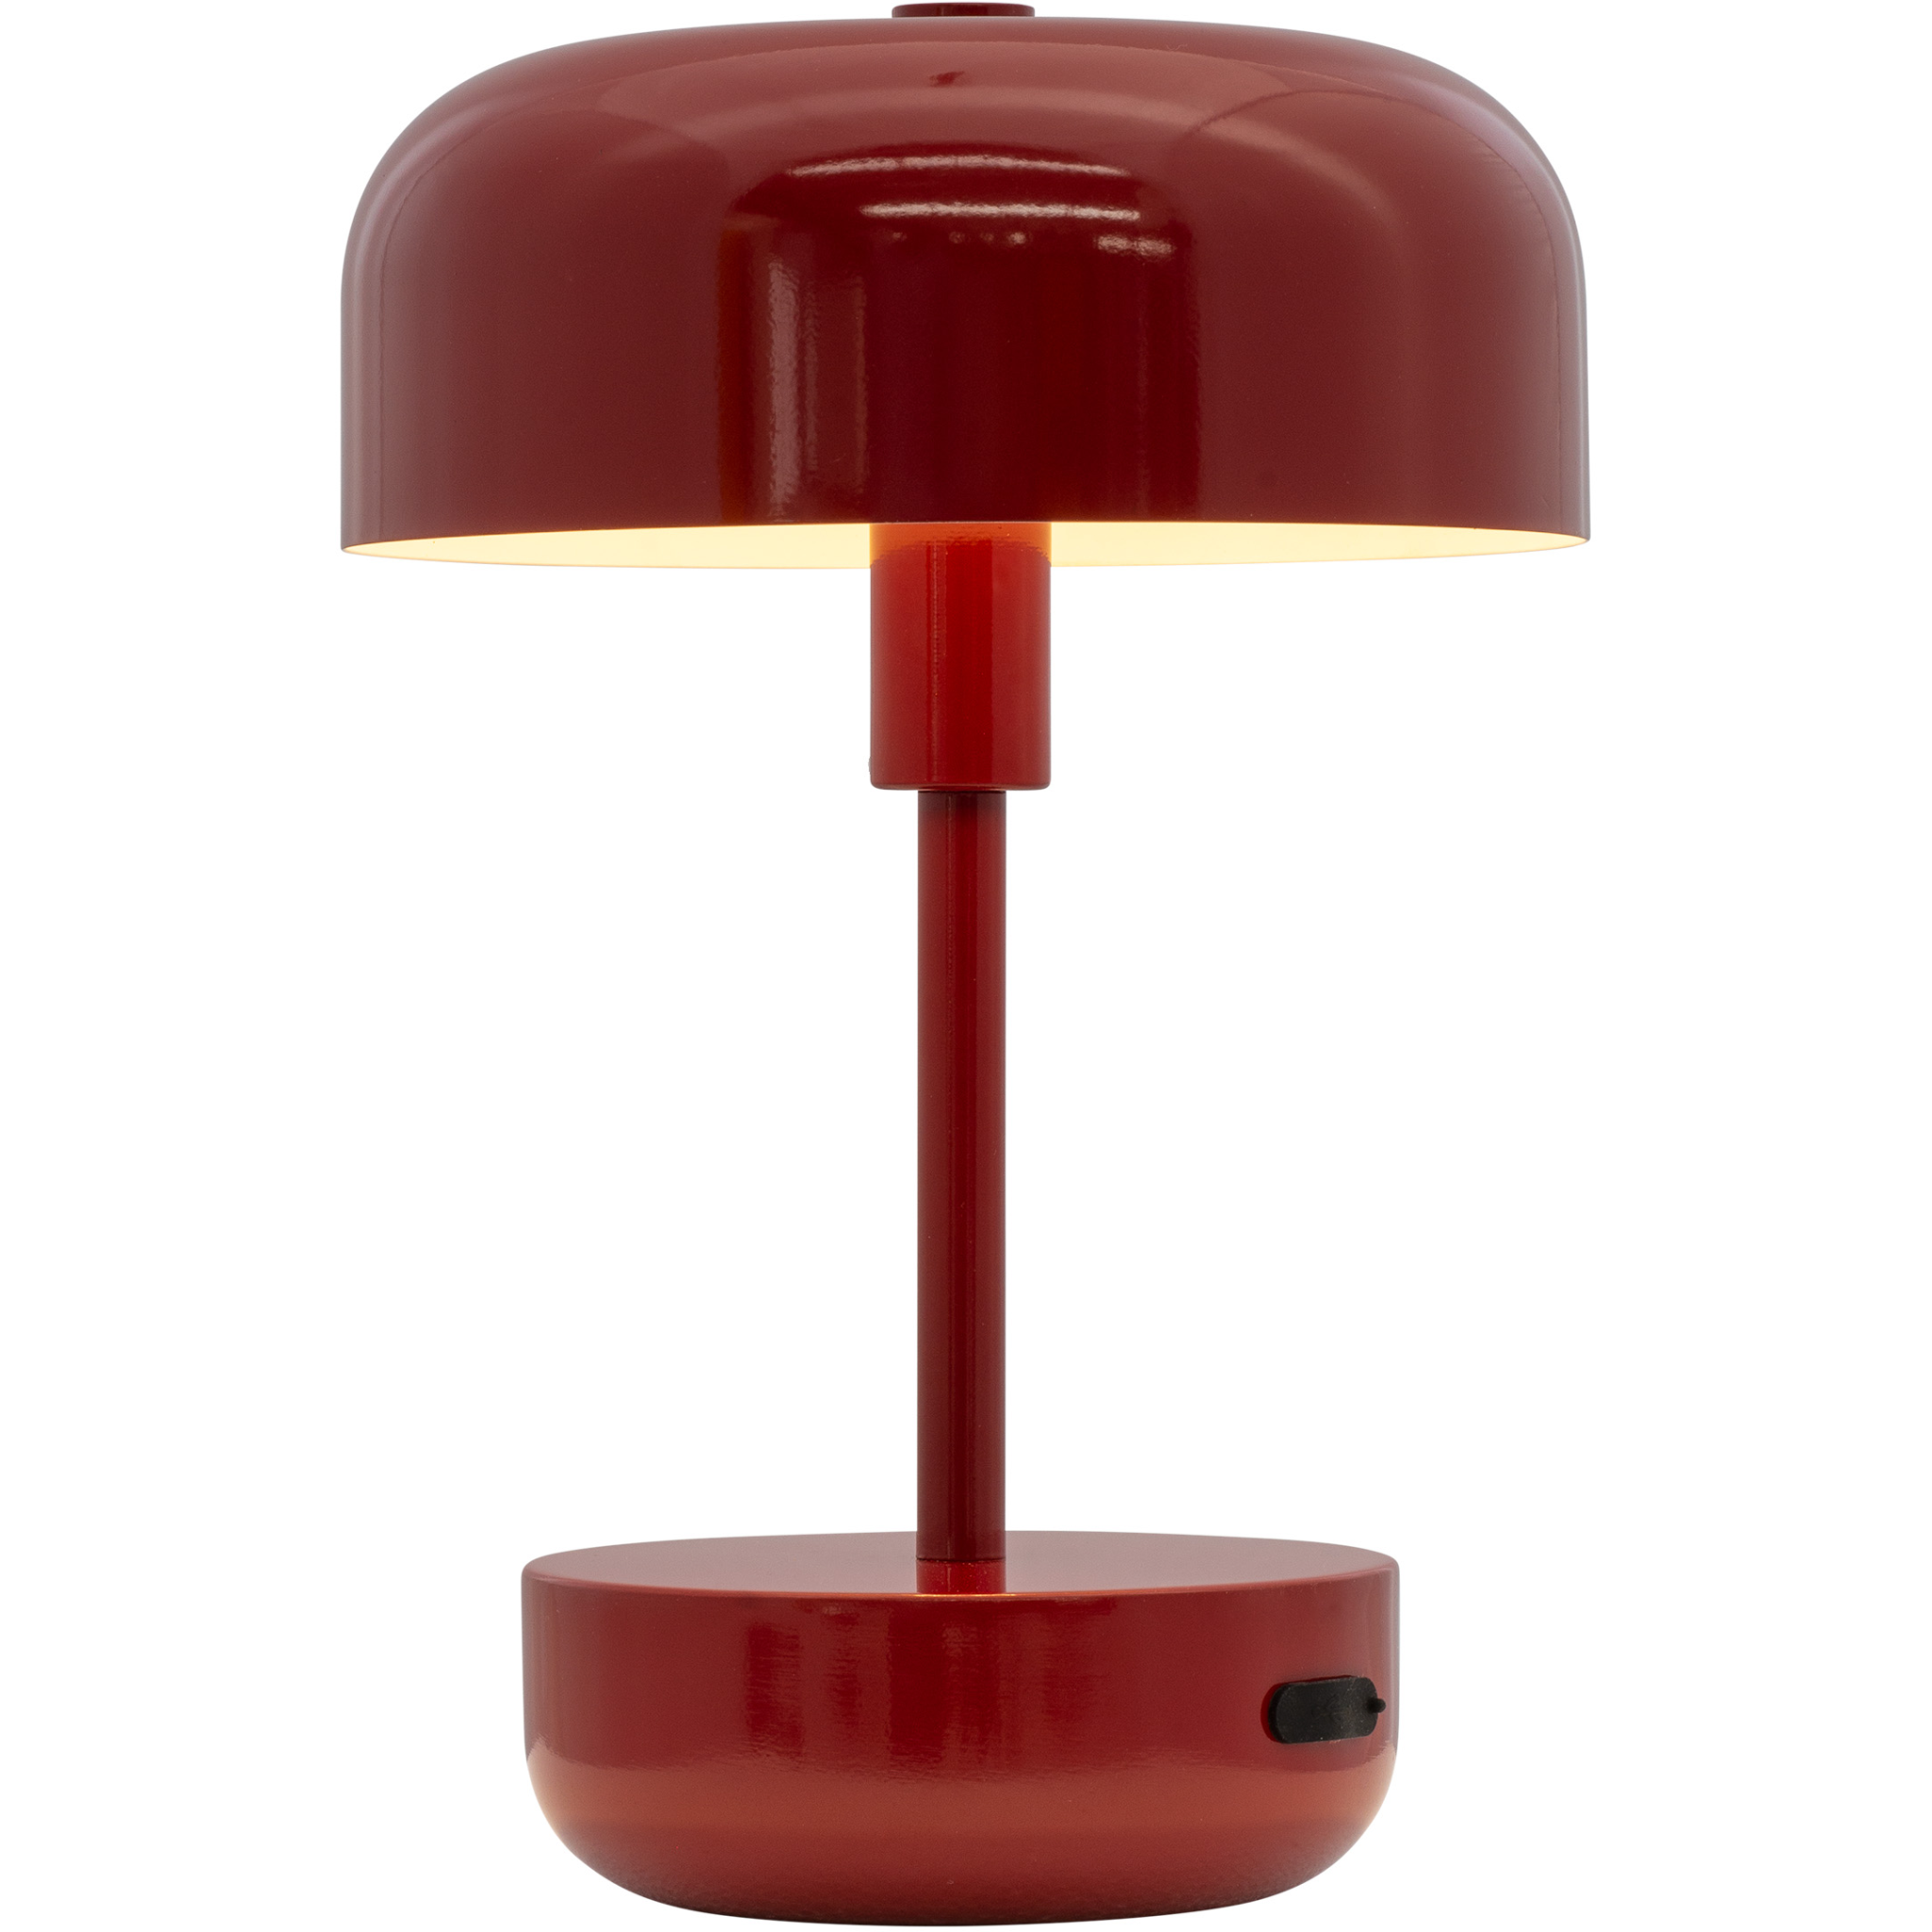 5704709071983 Dyberg Larsen Haipot mørkerød - Bordlampe portable Lamper,Bordlamper,Trådløse bordlamper 89200005870 7198